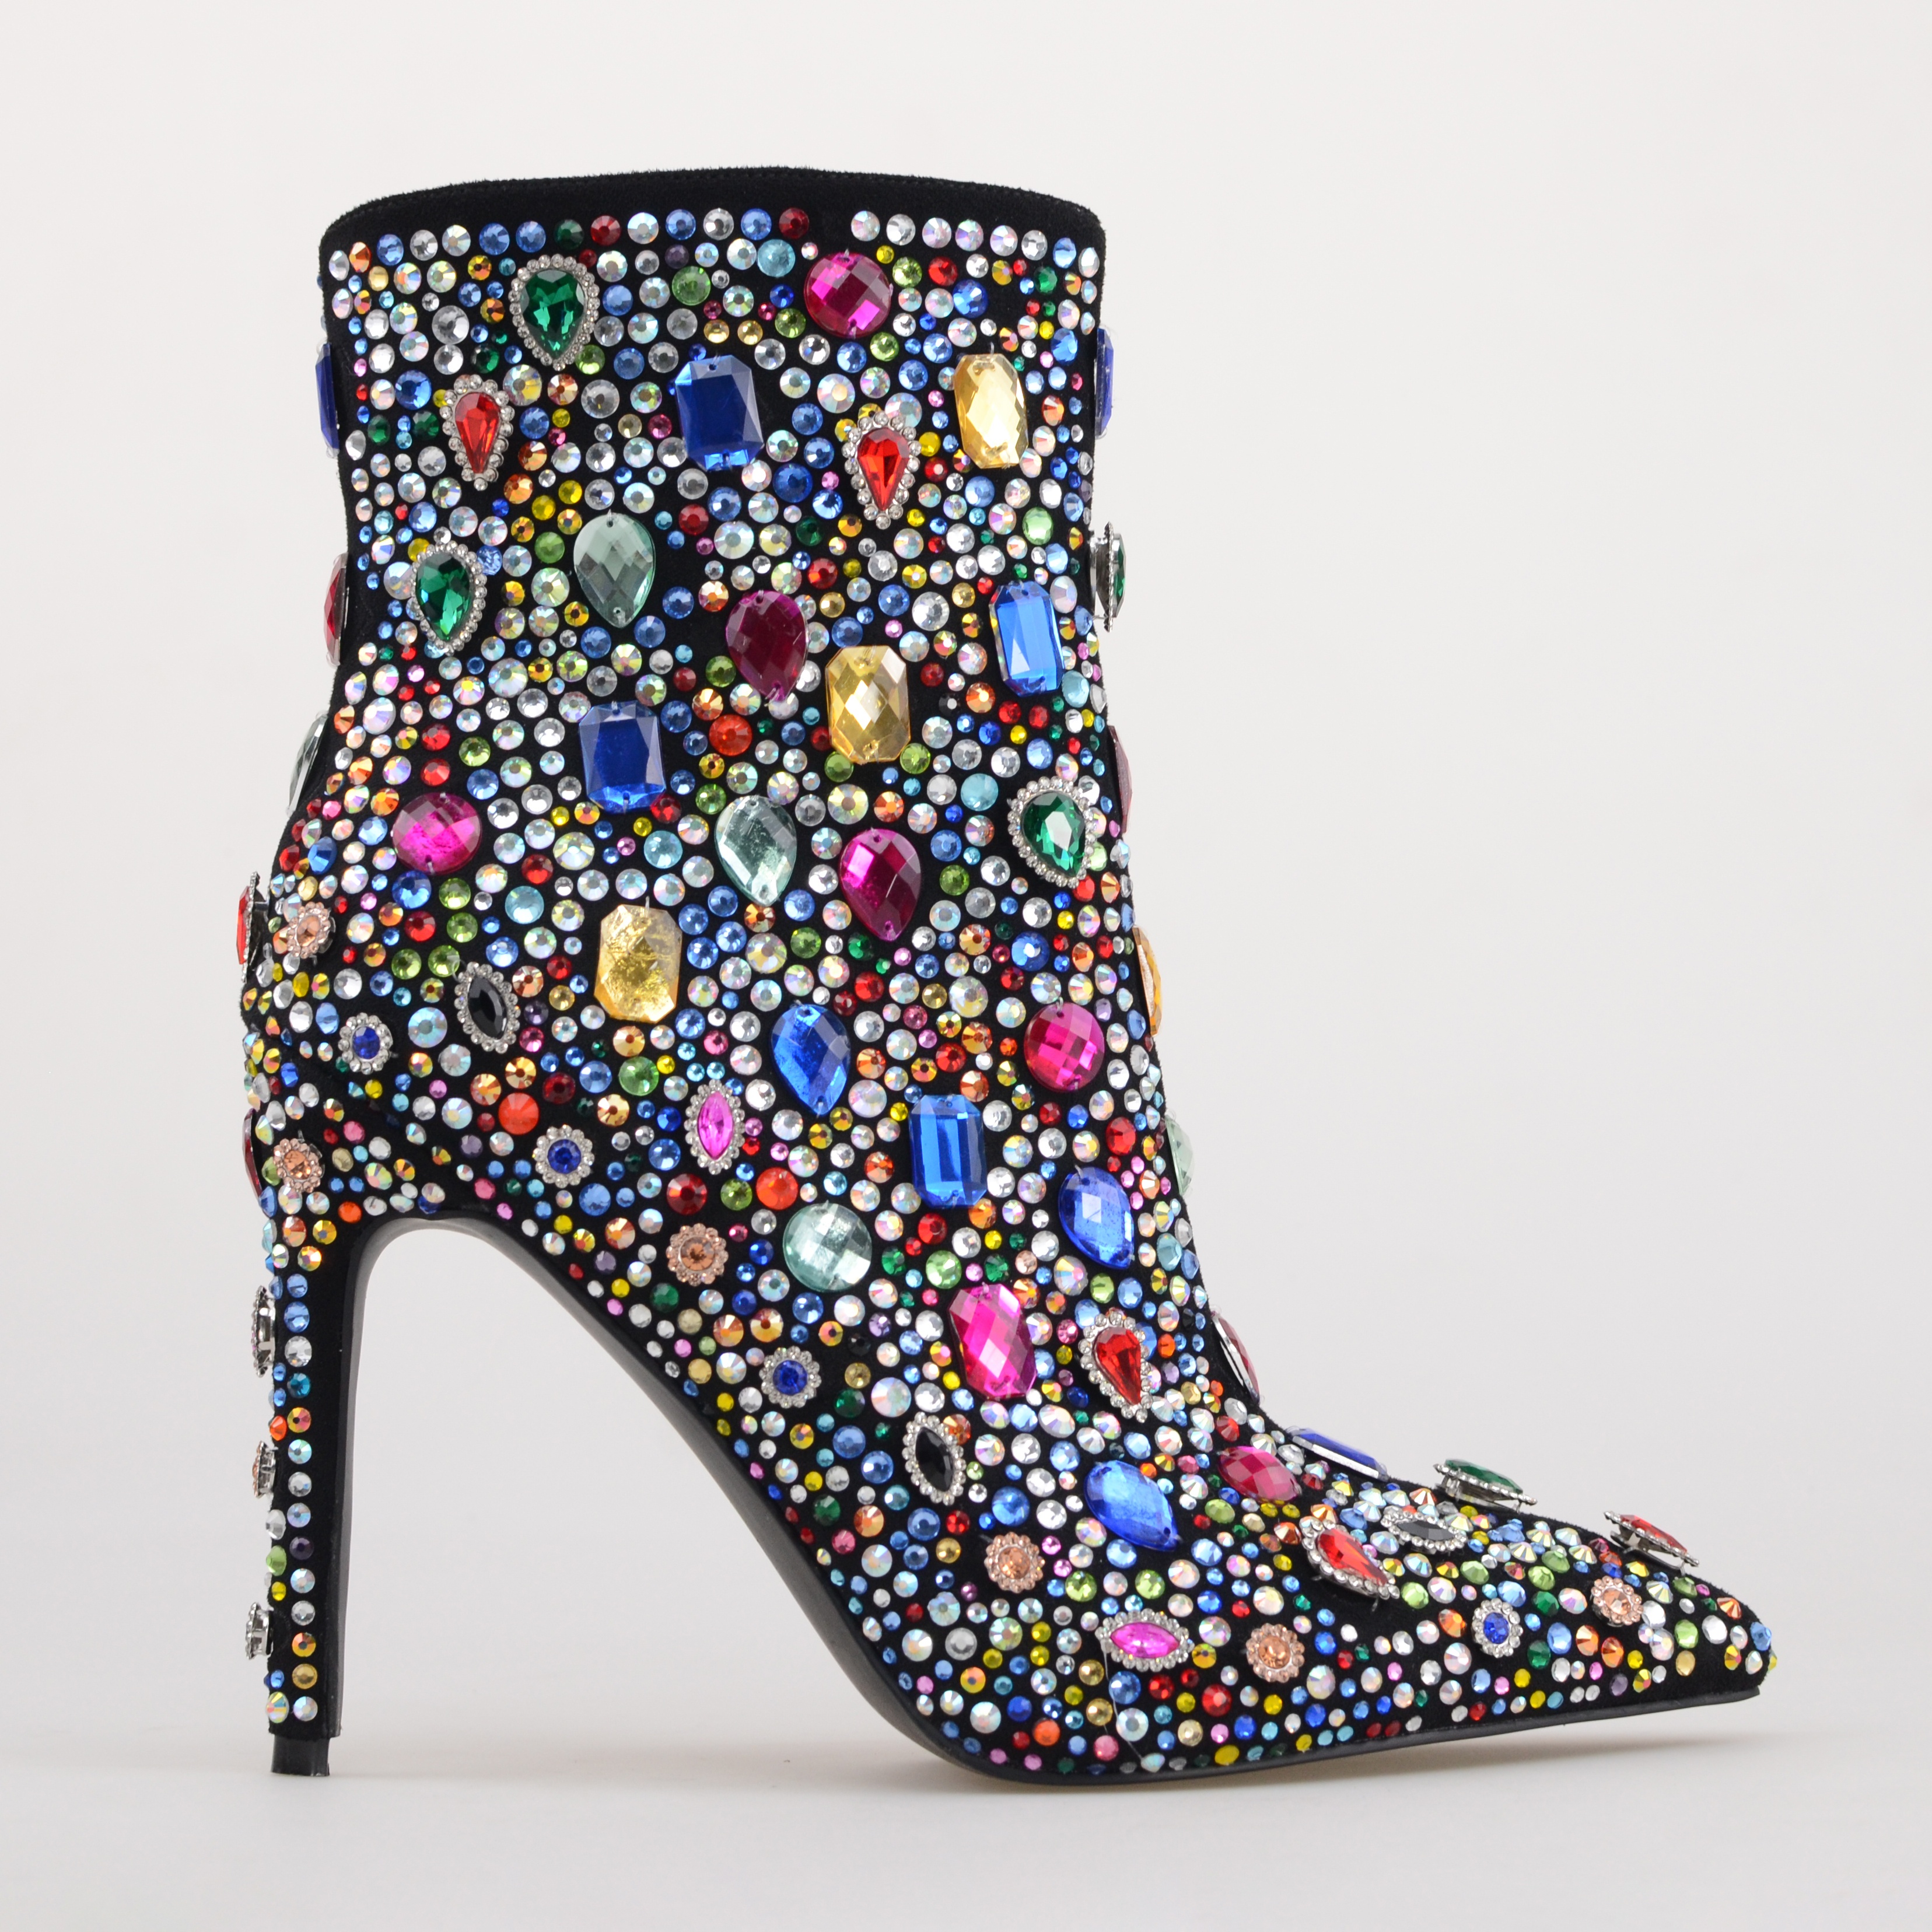 TAAFO Diamond-encrusted Jewelry Stiletto Heel Womens Shoes Rhinestones Rainbow Colors Ankle Boots High Heel B